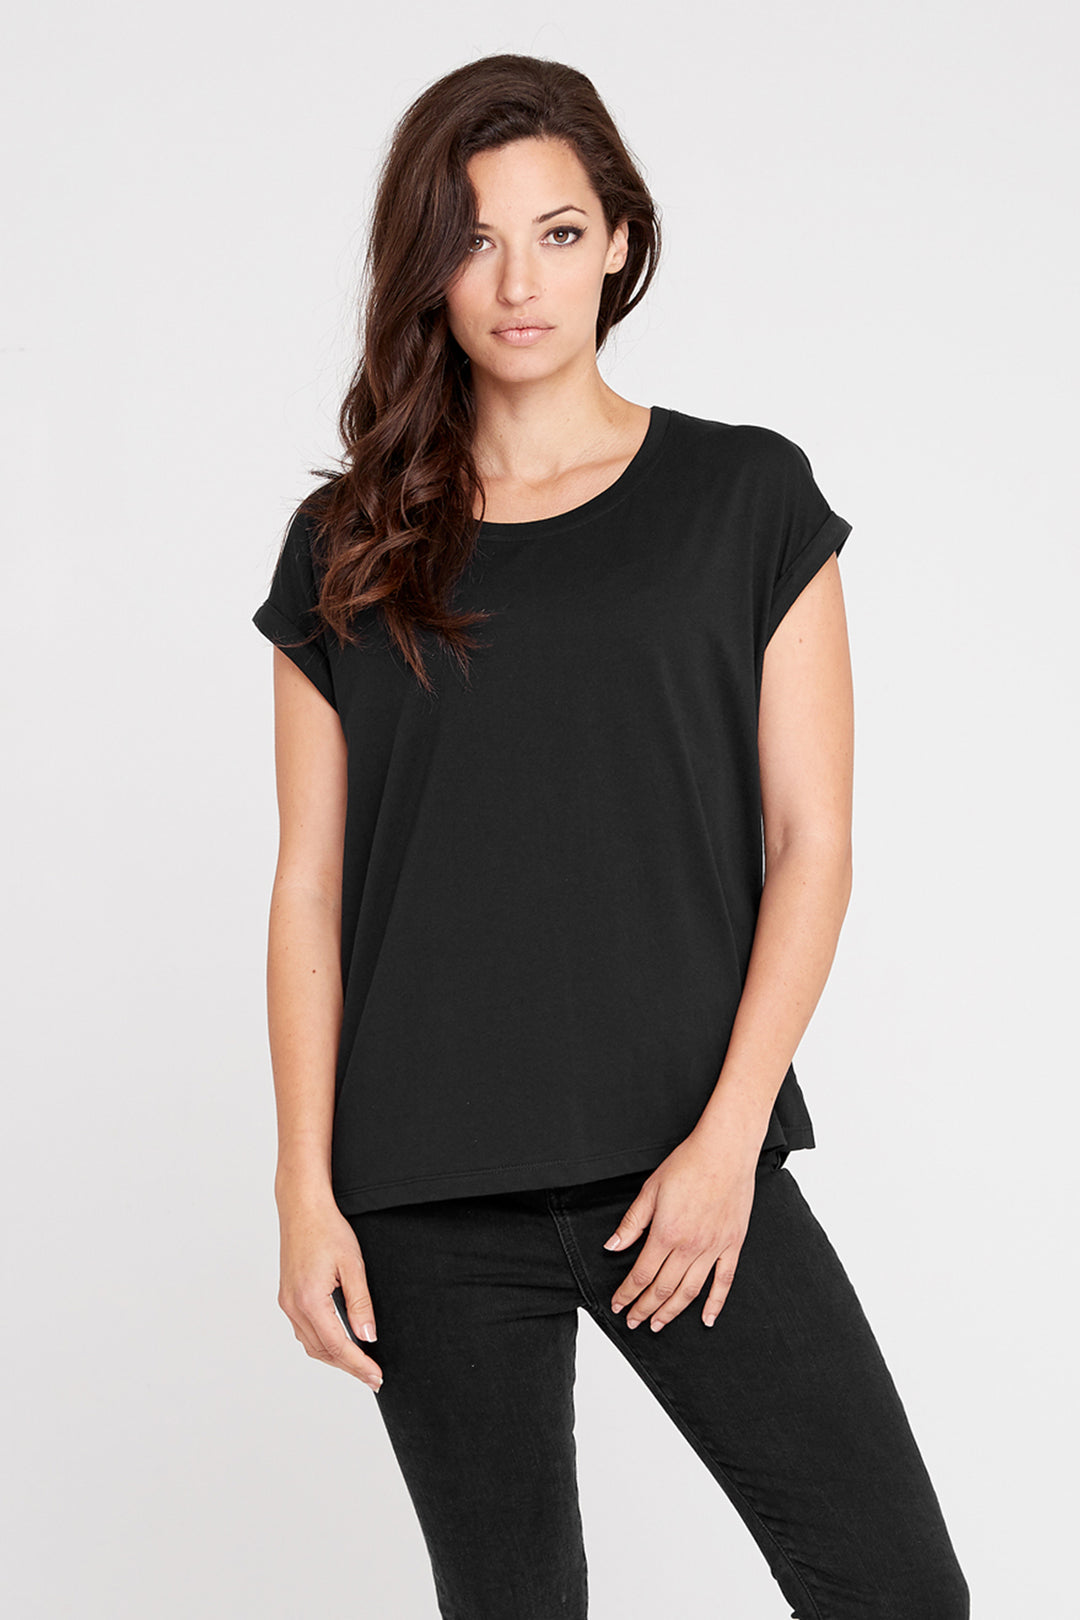 Dorsu Roll Sleeve Crew Black T-Shirt, available on ZERRIN